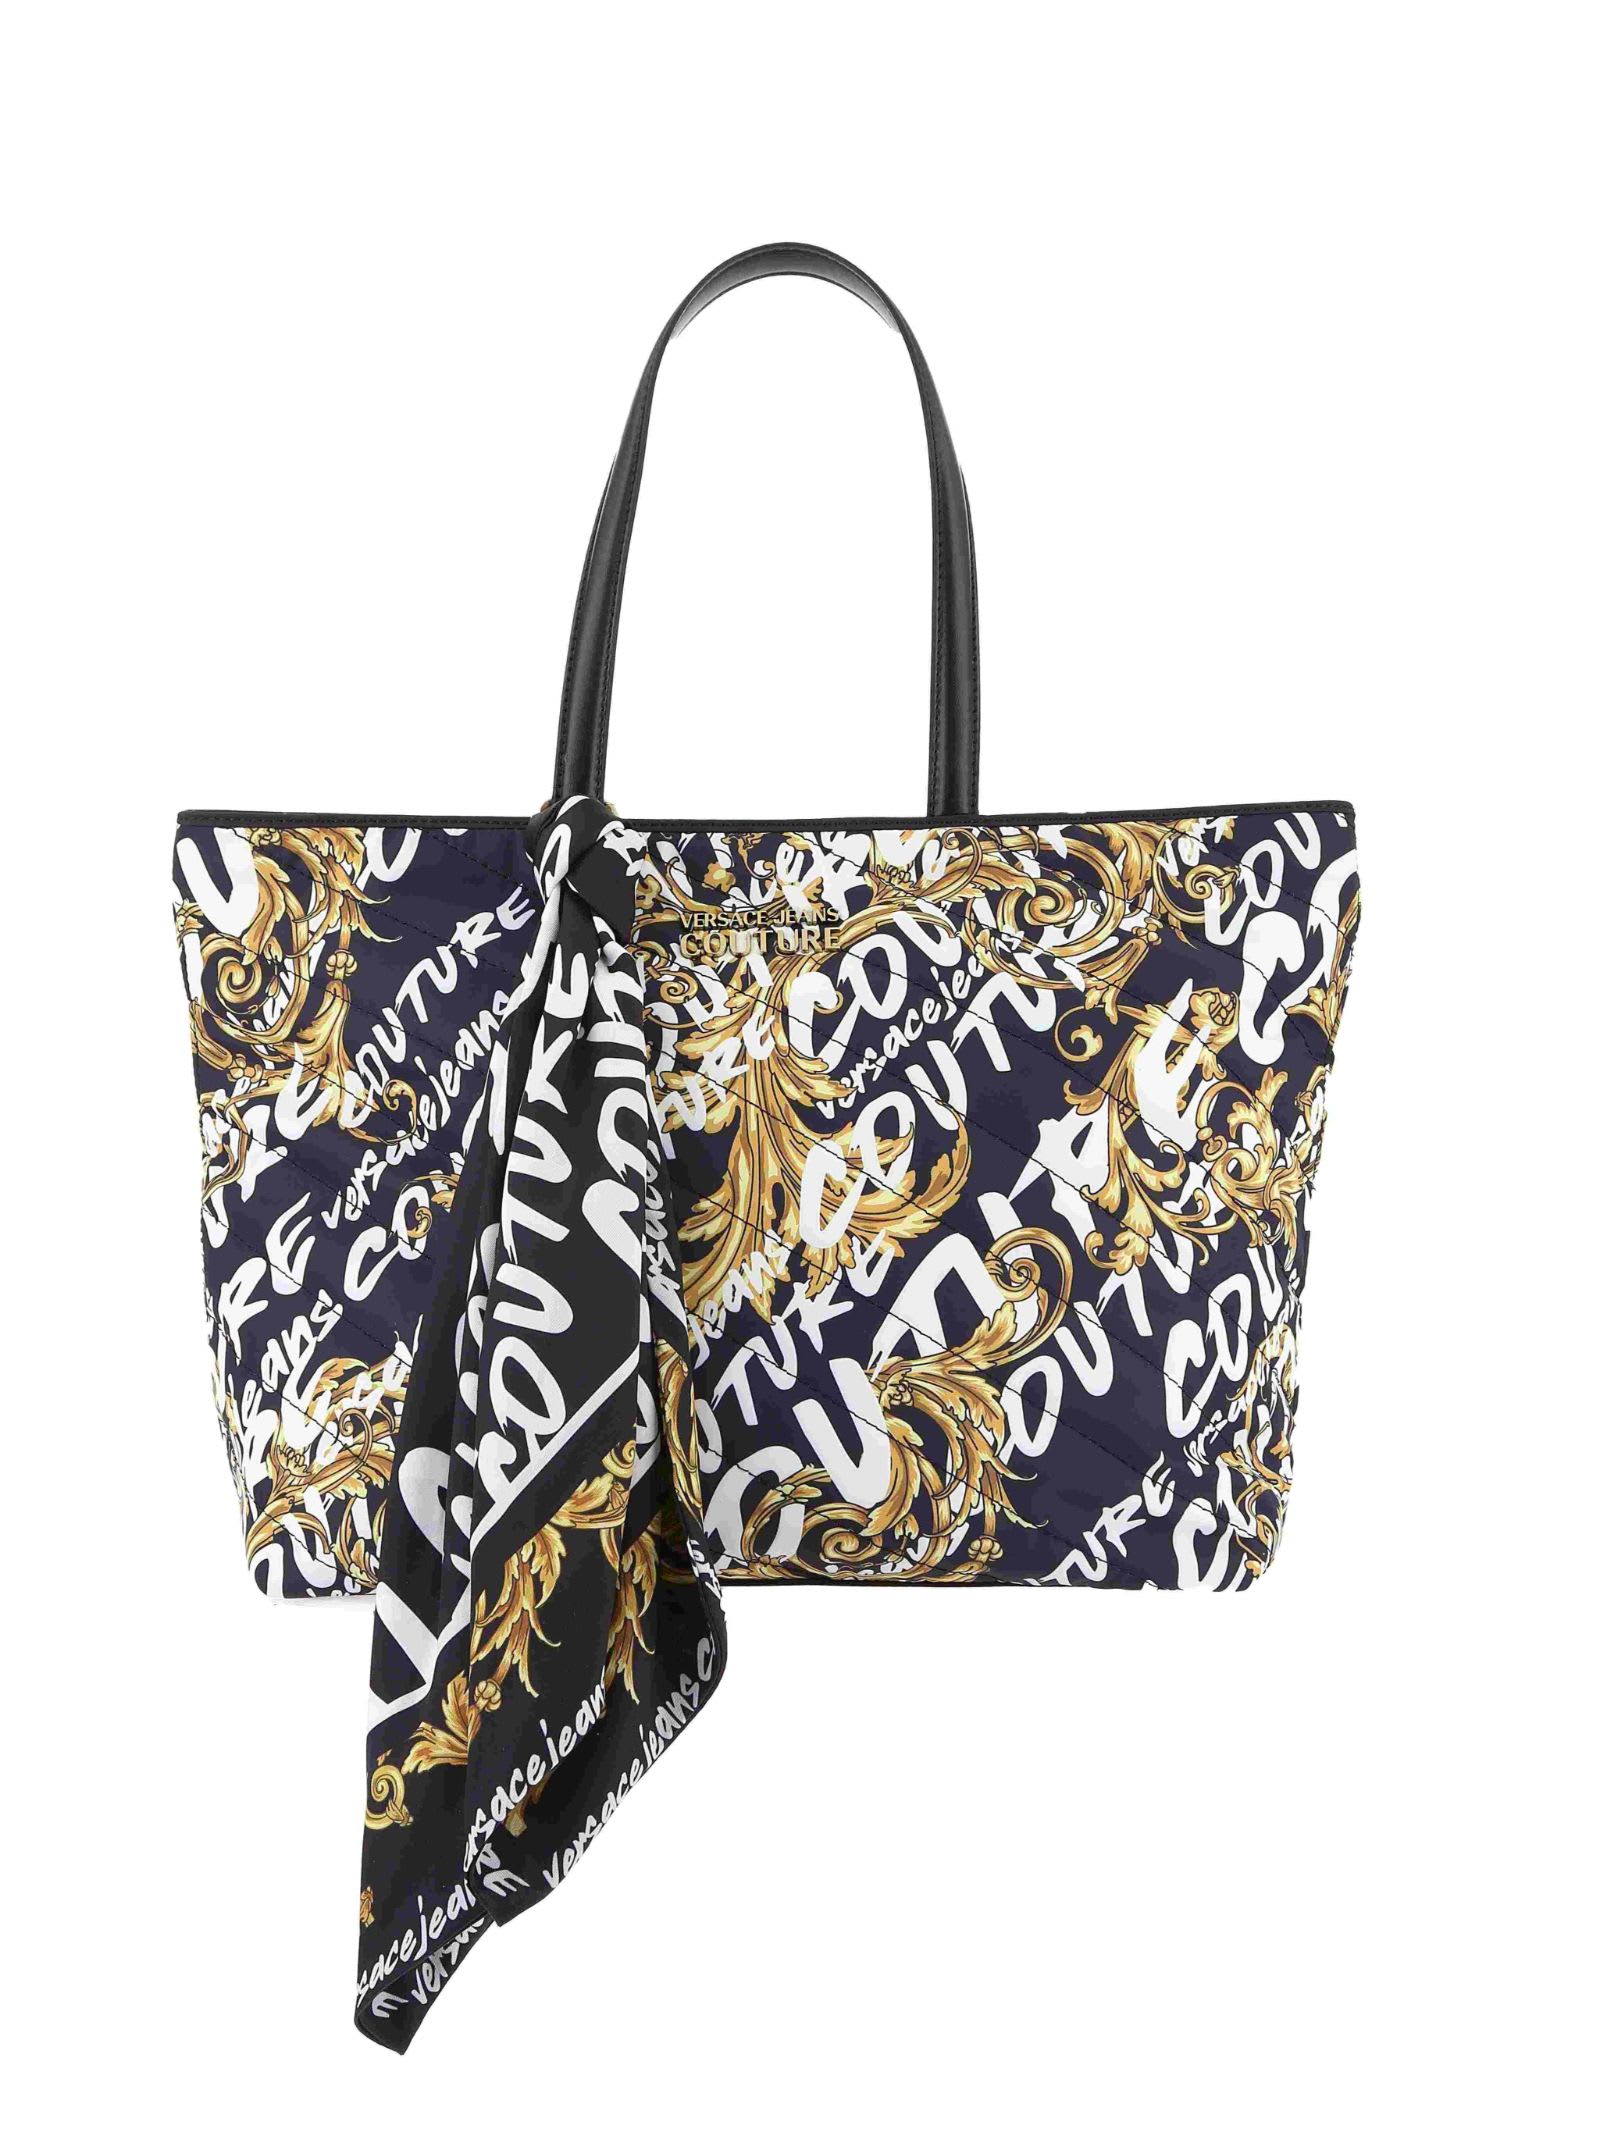 Versace Jeans Couture women Sketch couture handbags black - gold: Handbags